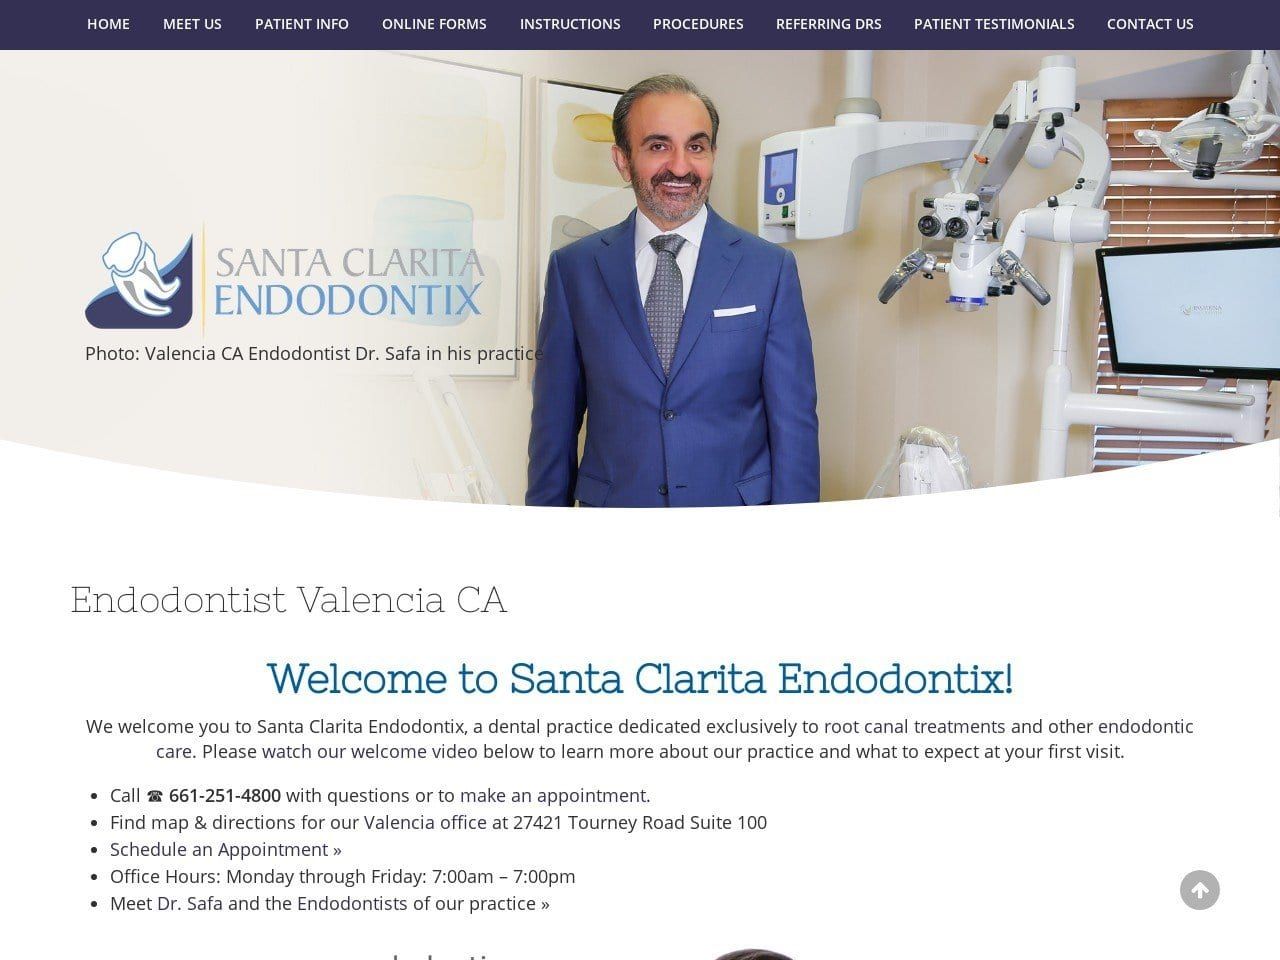 Santa Clarita Endodontix Website Screenshot from santaclaritaendodontix.com